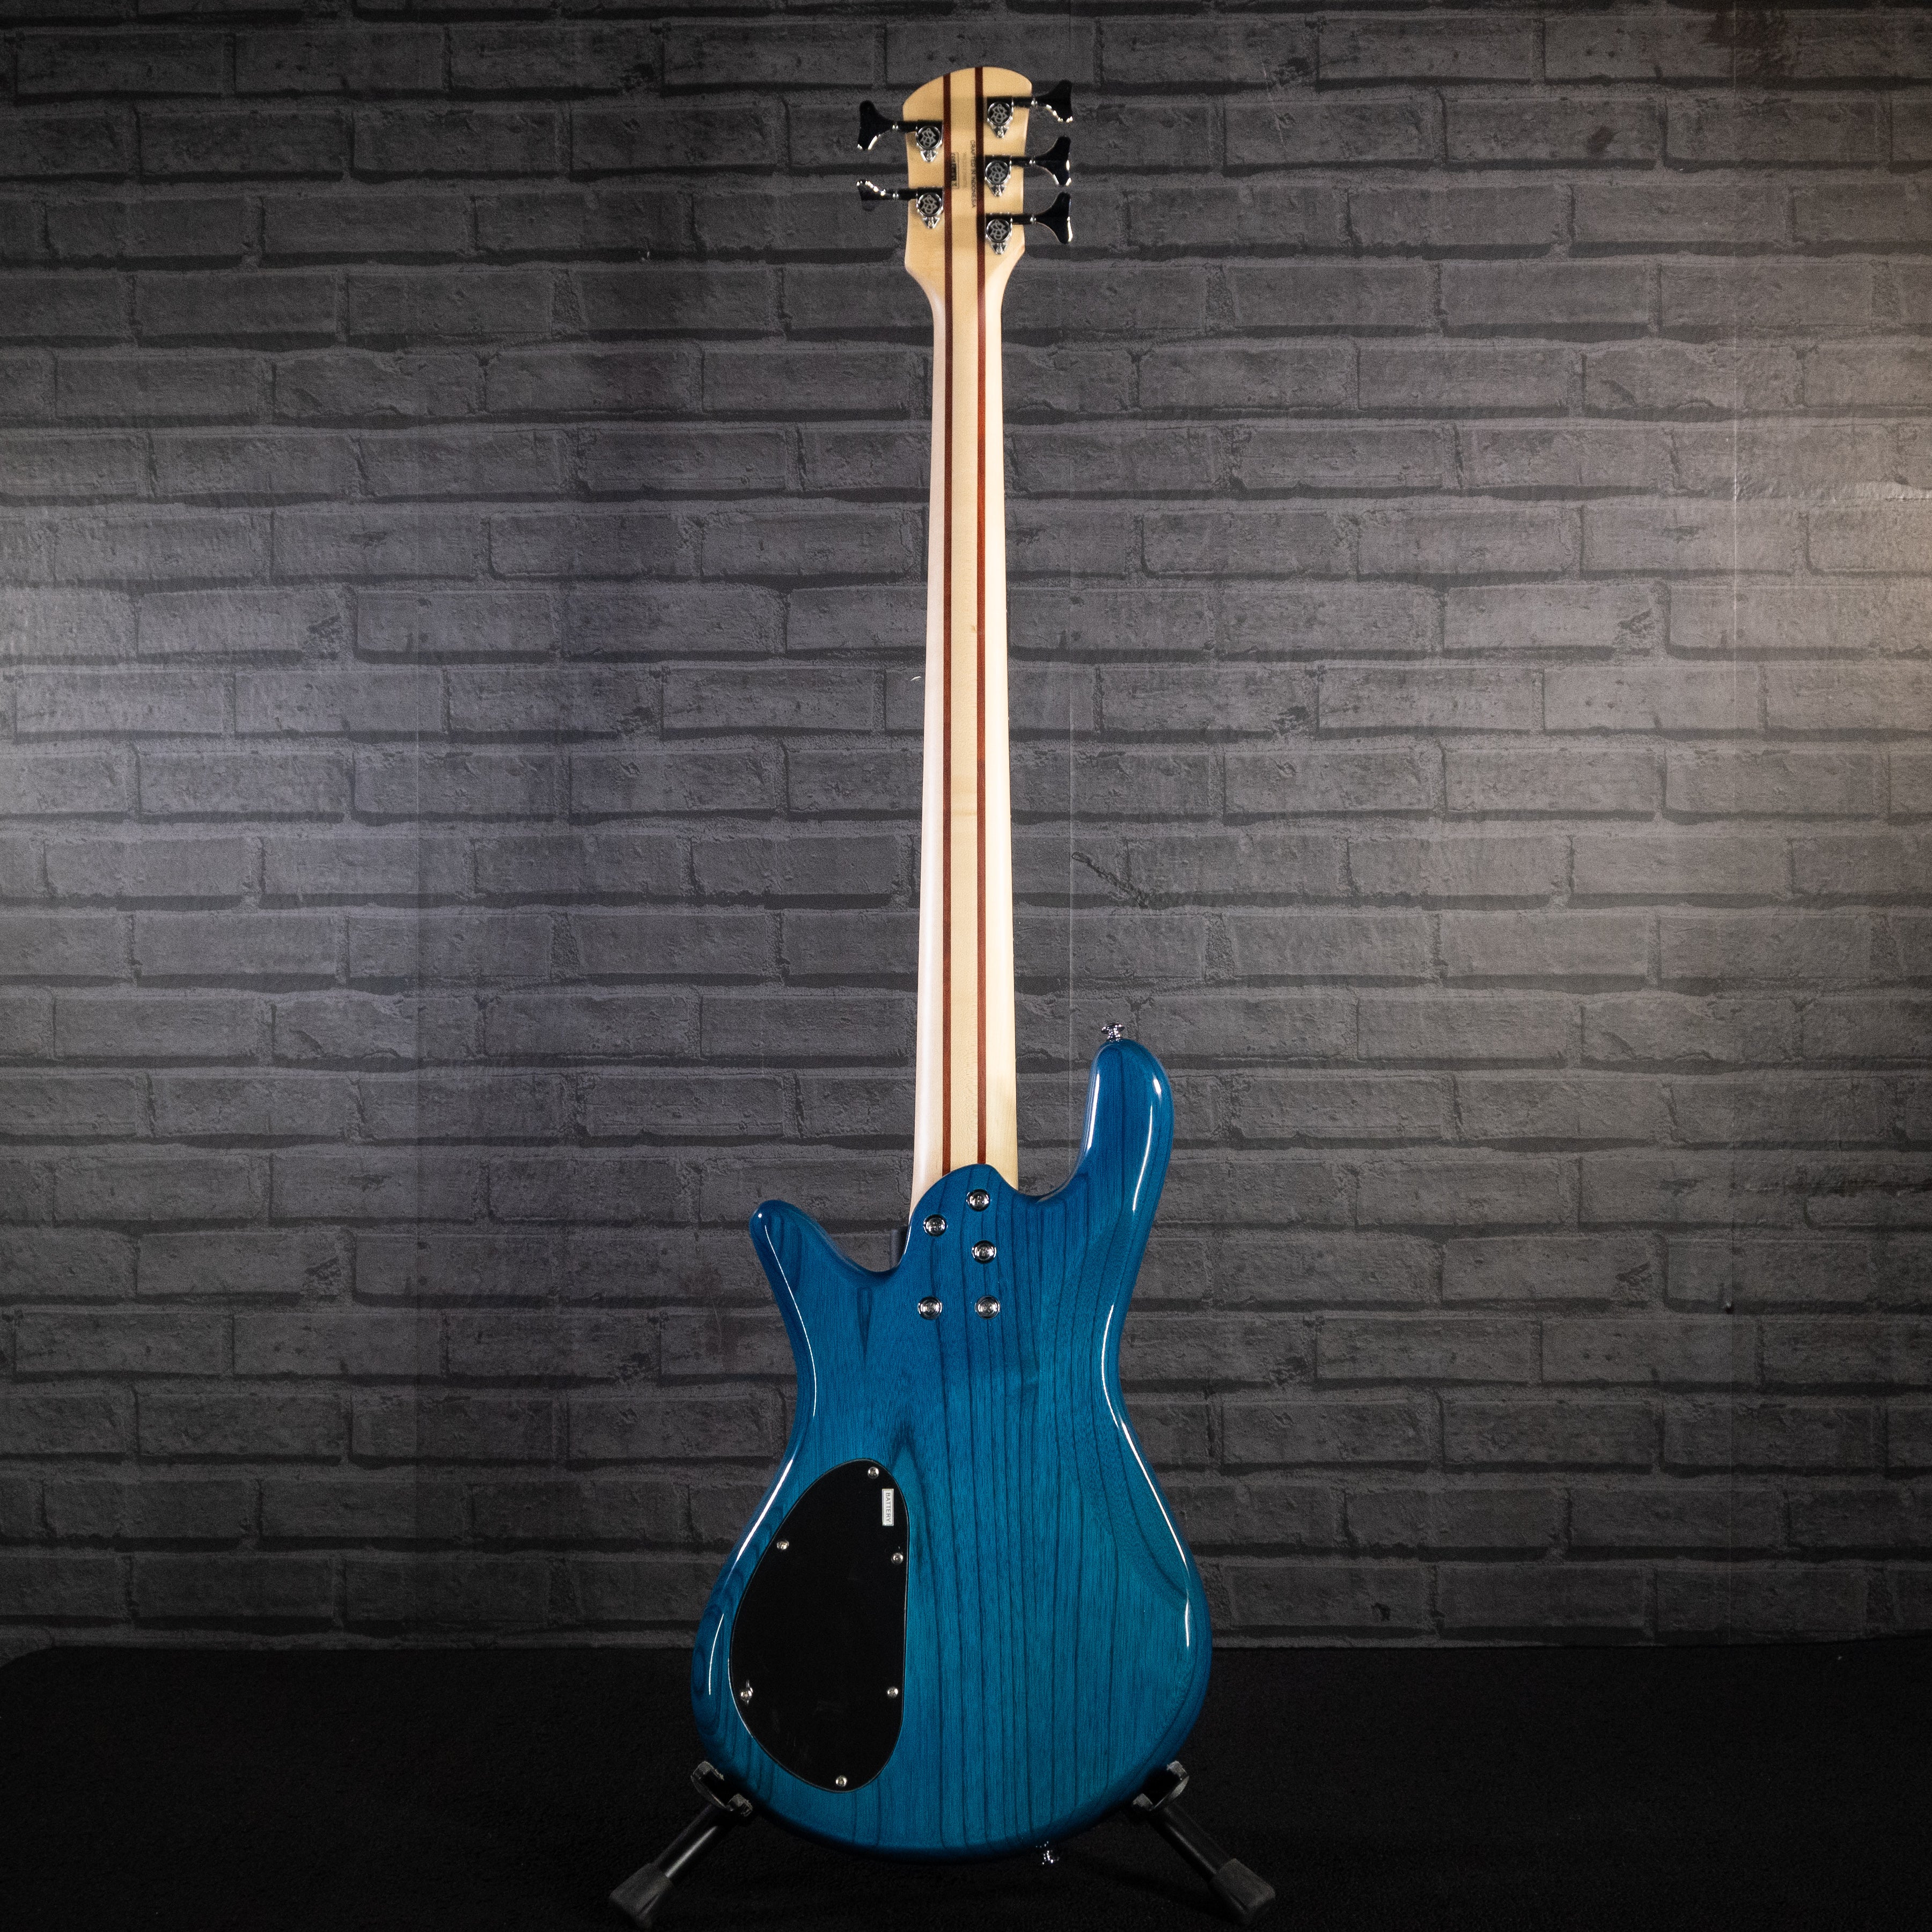 Spector Bass Guitars - Iconic Designs and Custom Made Bass Guitars